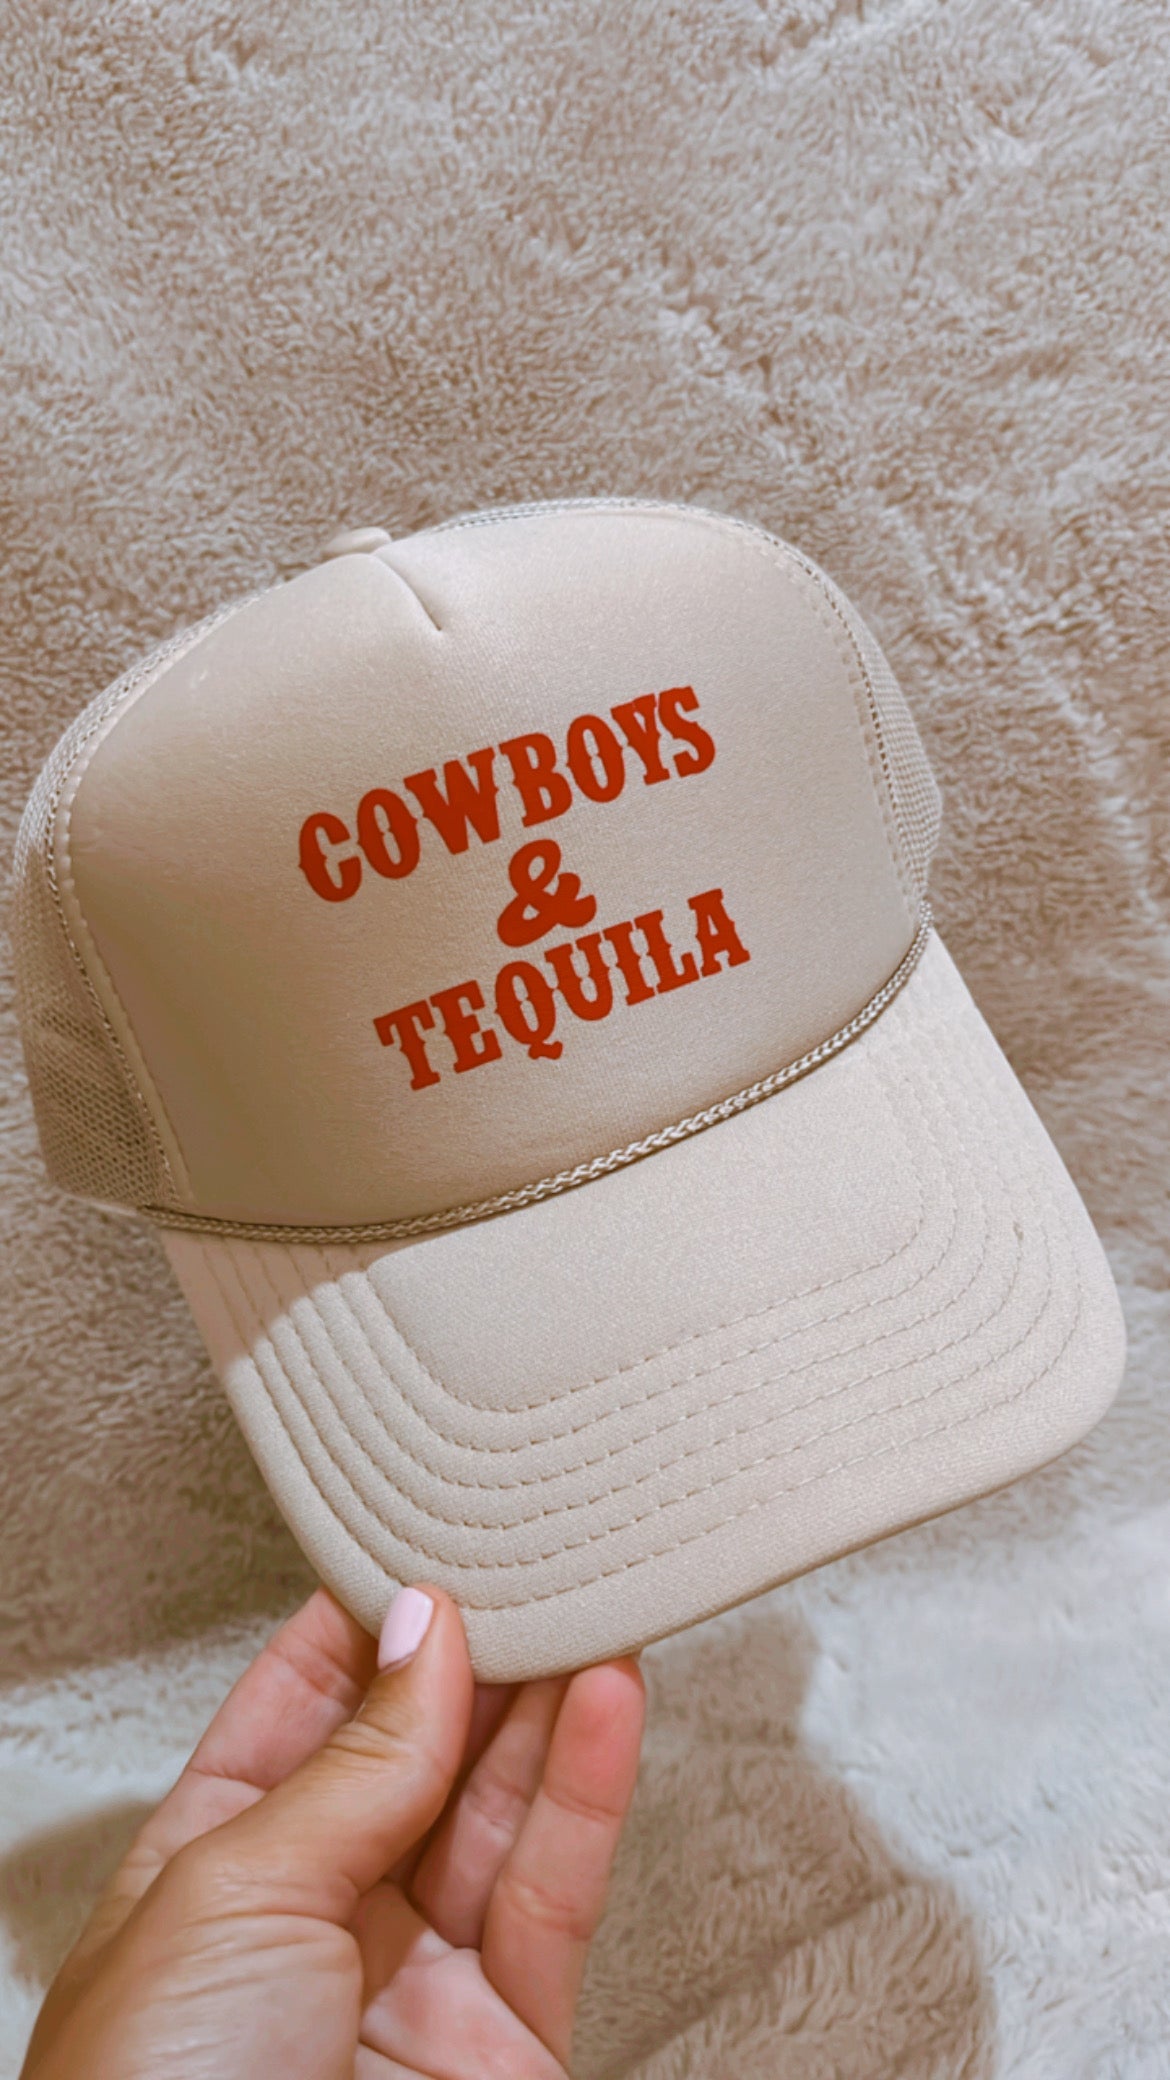 Cowboys & Tequila trucker